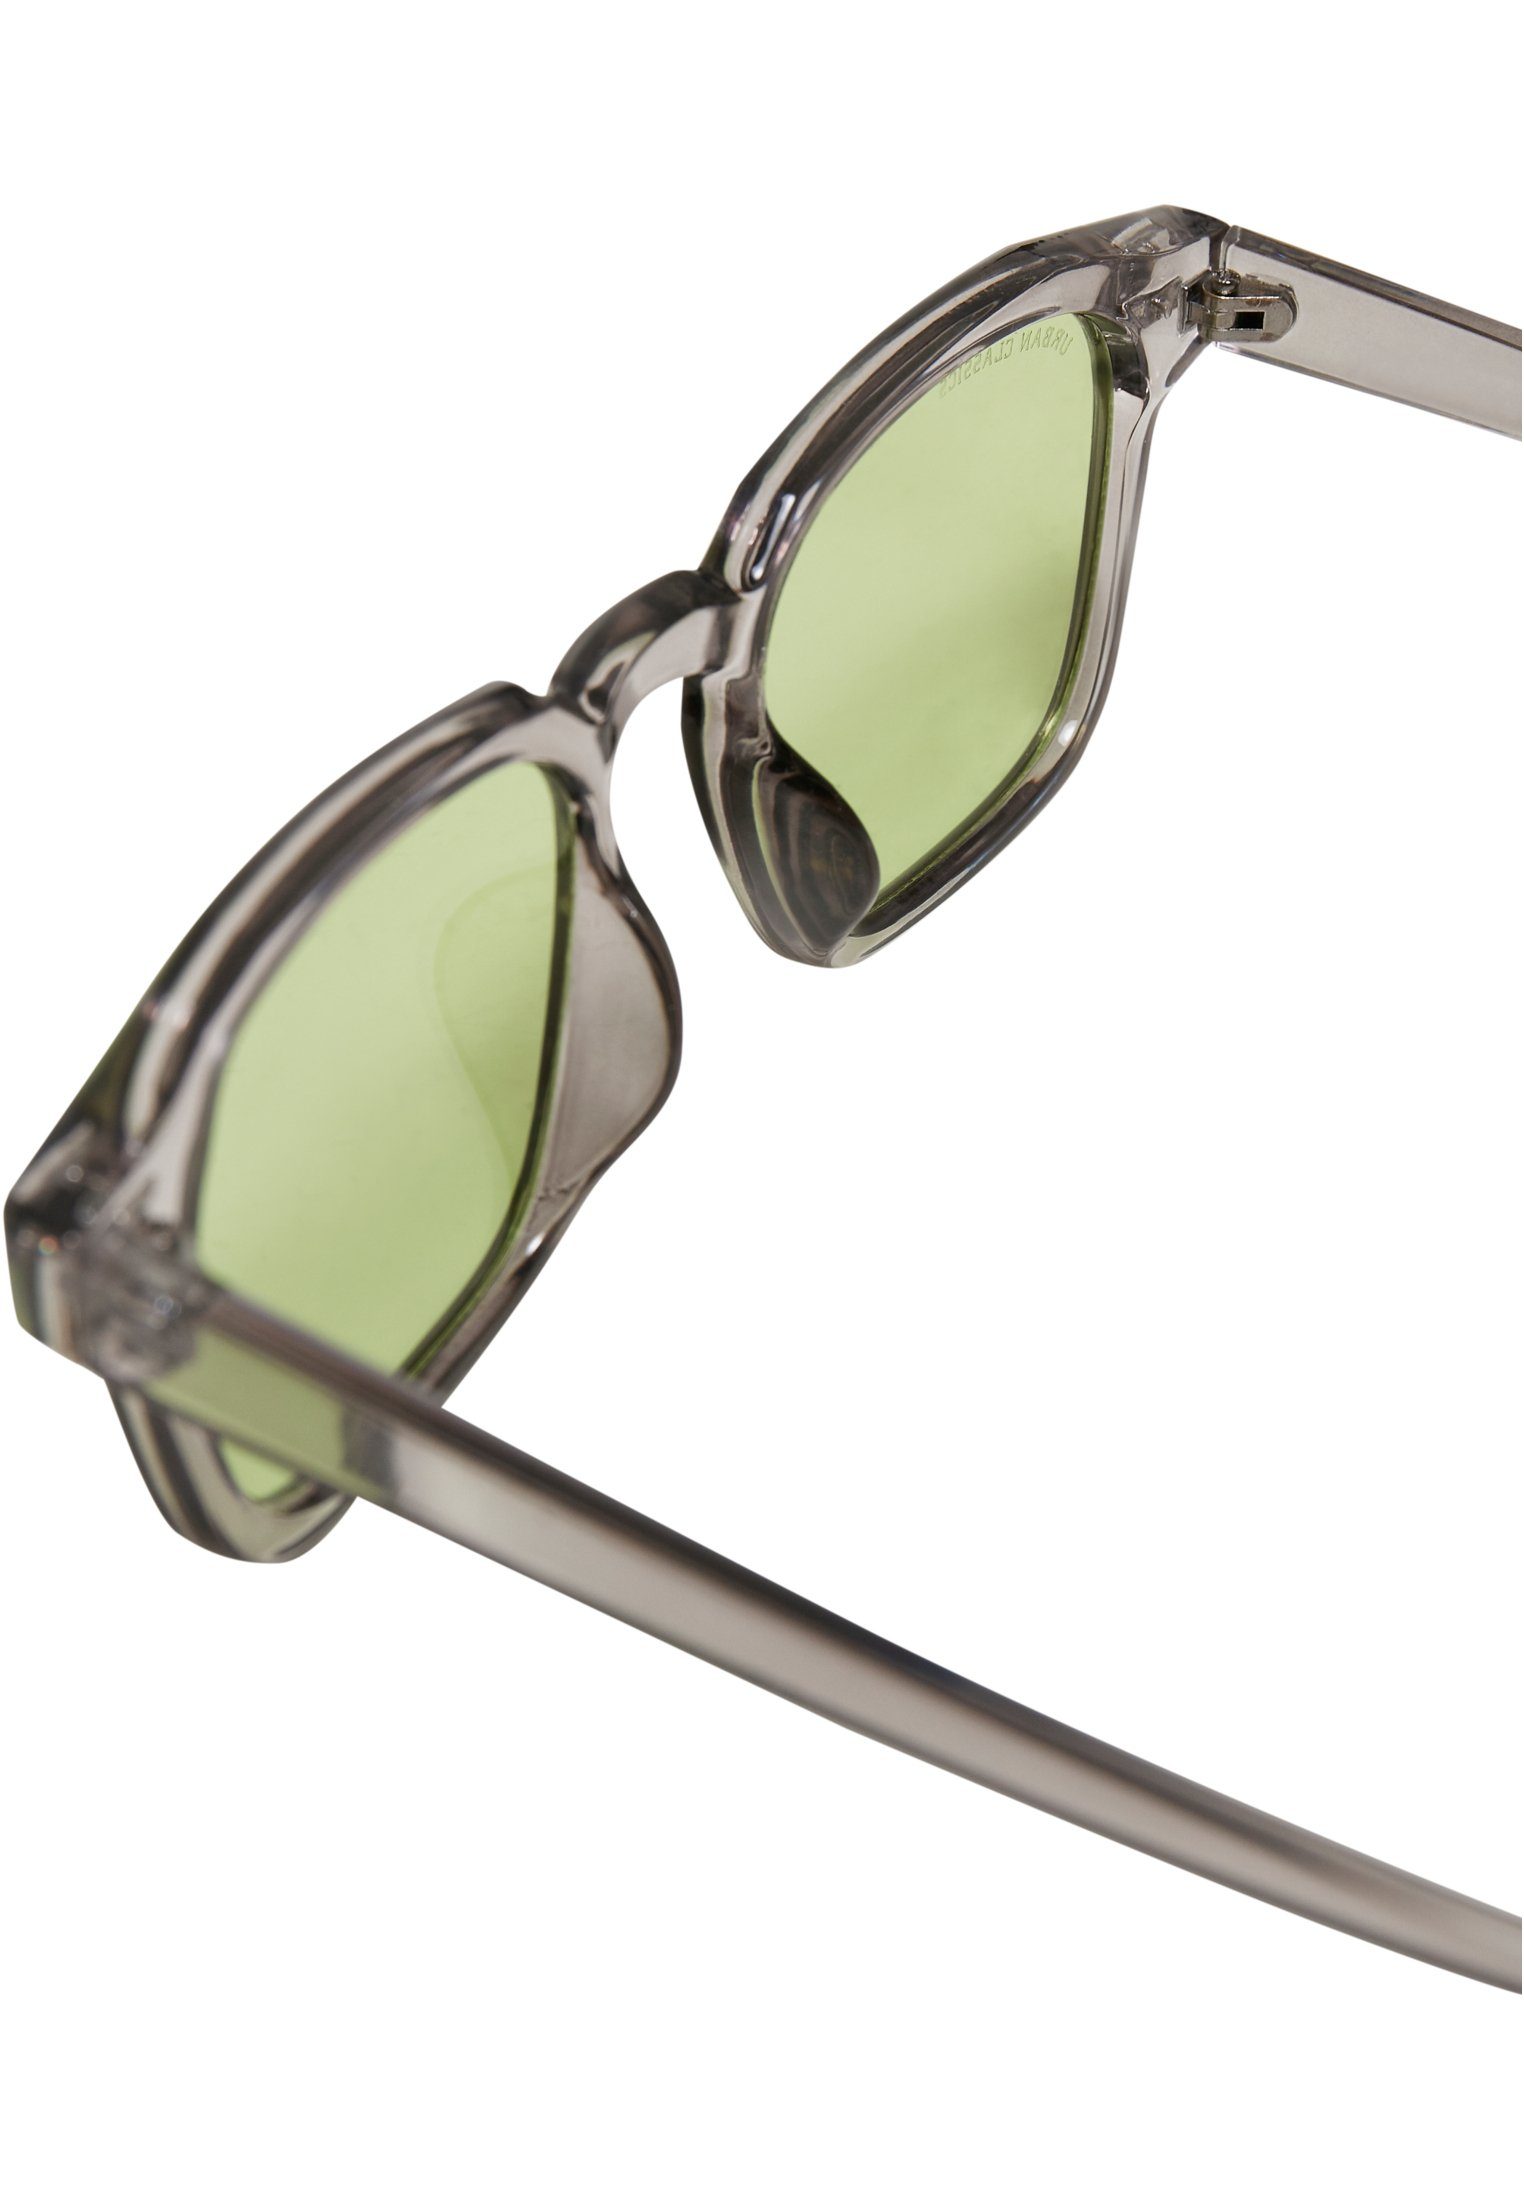 CLASSICS With Sonnenbrille grey/yellow URBAN Unisex Maui Case Sunglasses